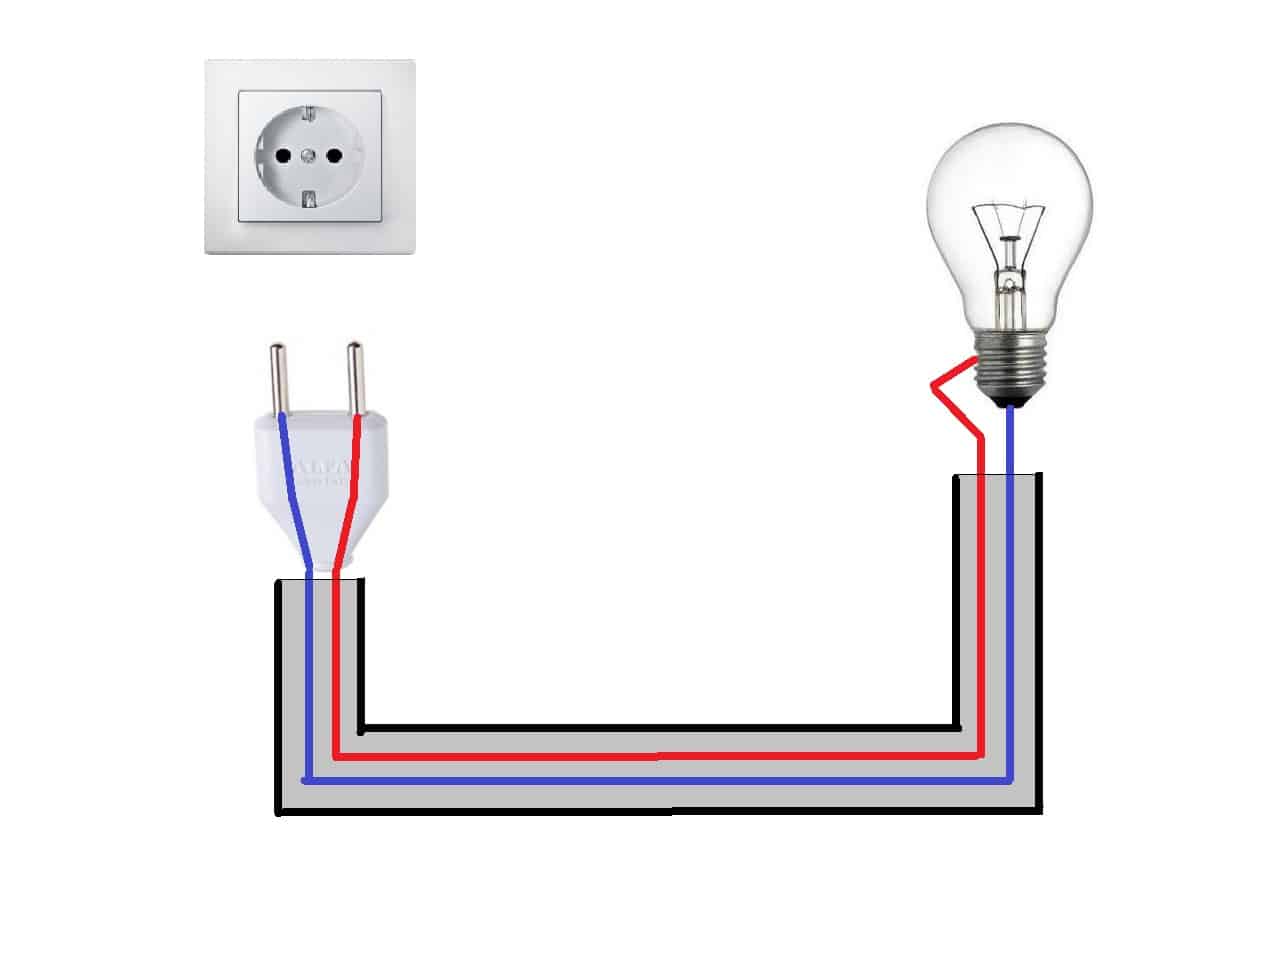 Подключение патрона для лампочки в зависимости от типа патрона